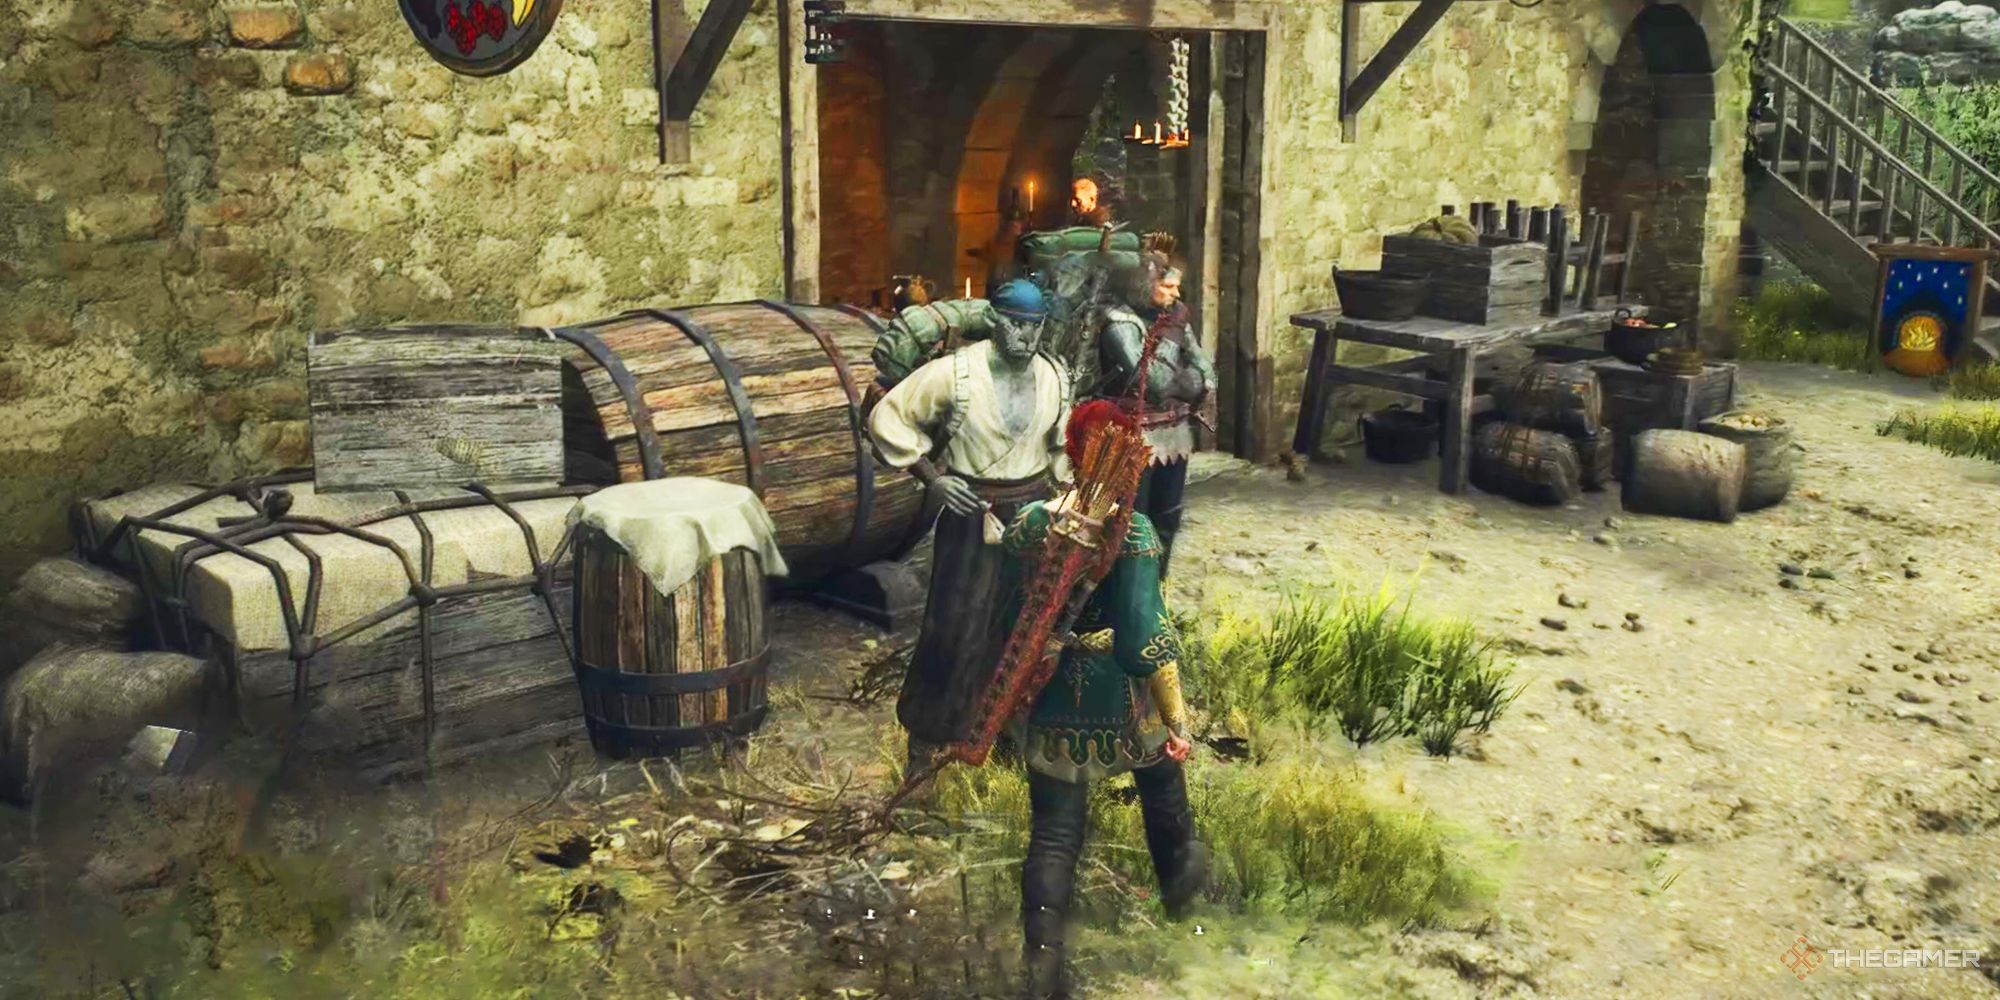 A player approaching merchants in Dragon's Dogma 2